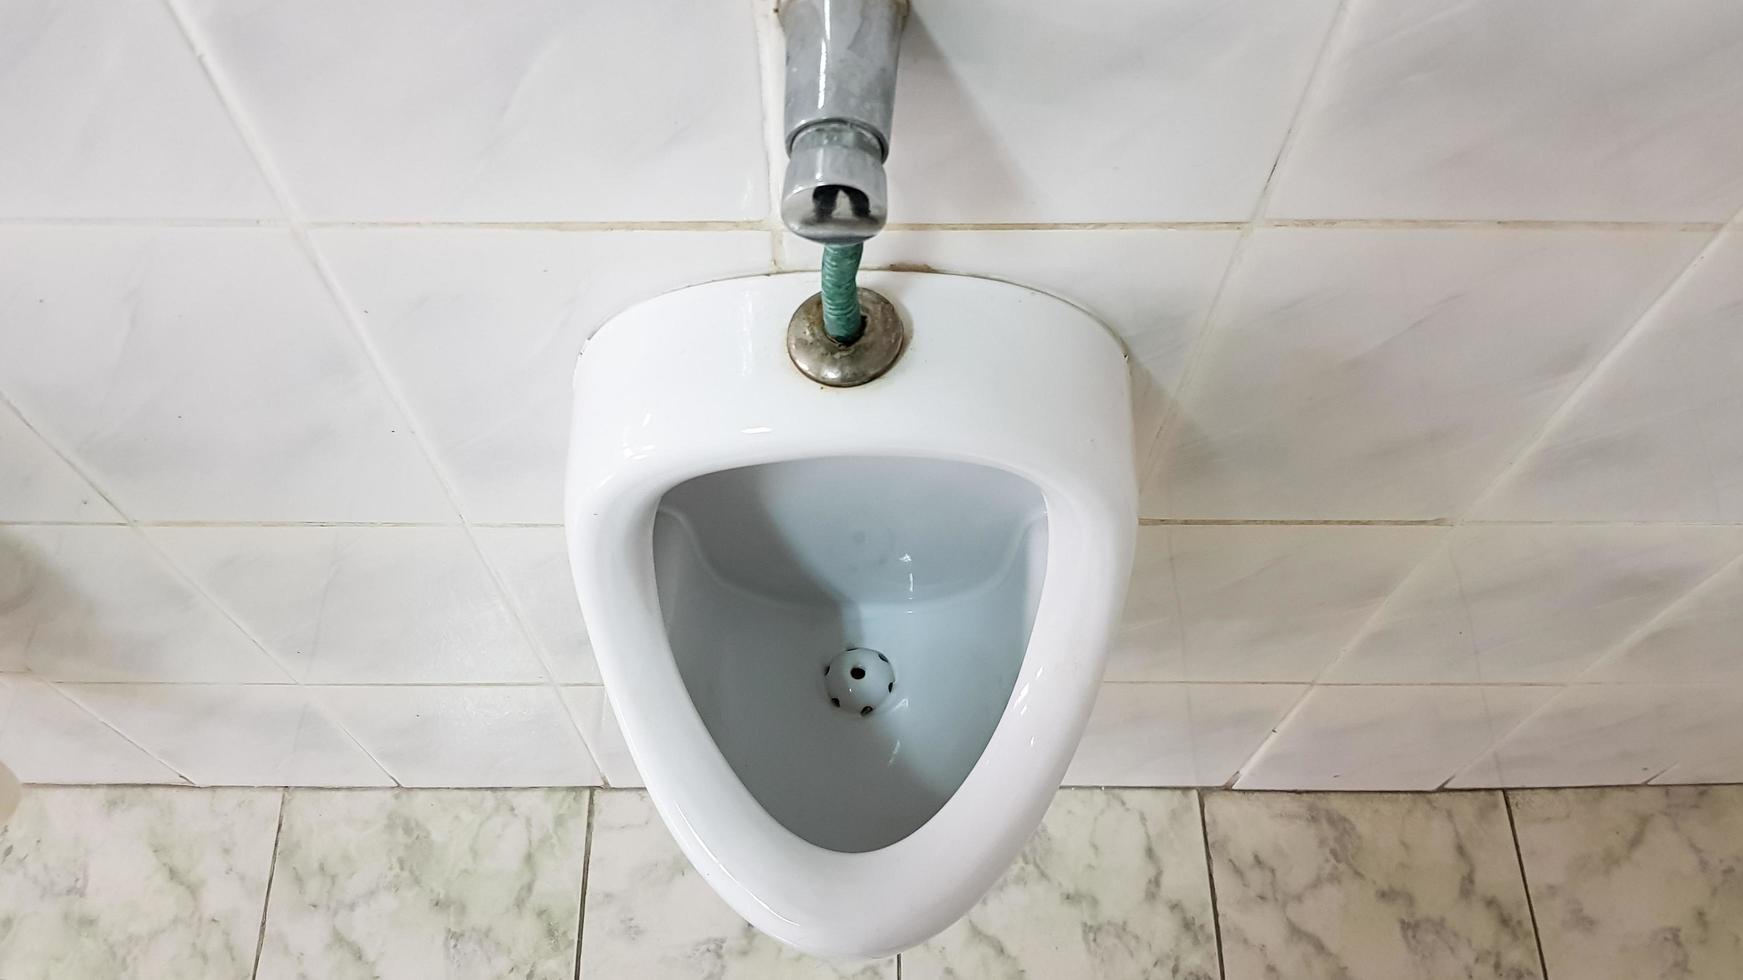 Public toilet with one ceramic urinal. Urinals prepare bowls for men. photo